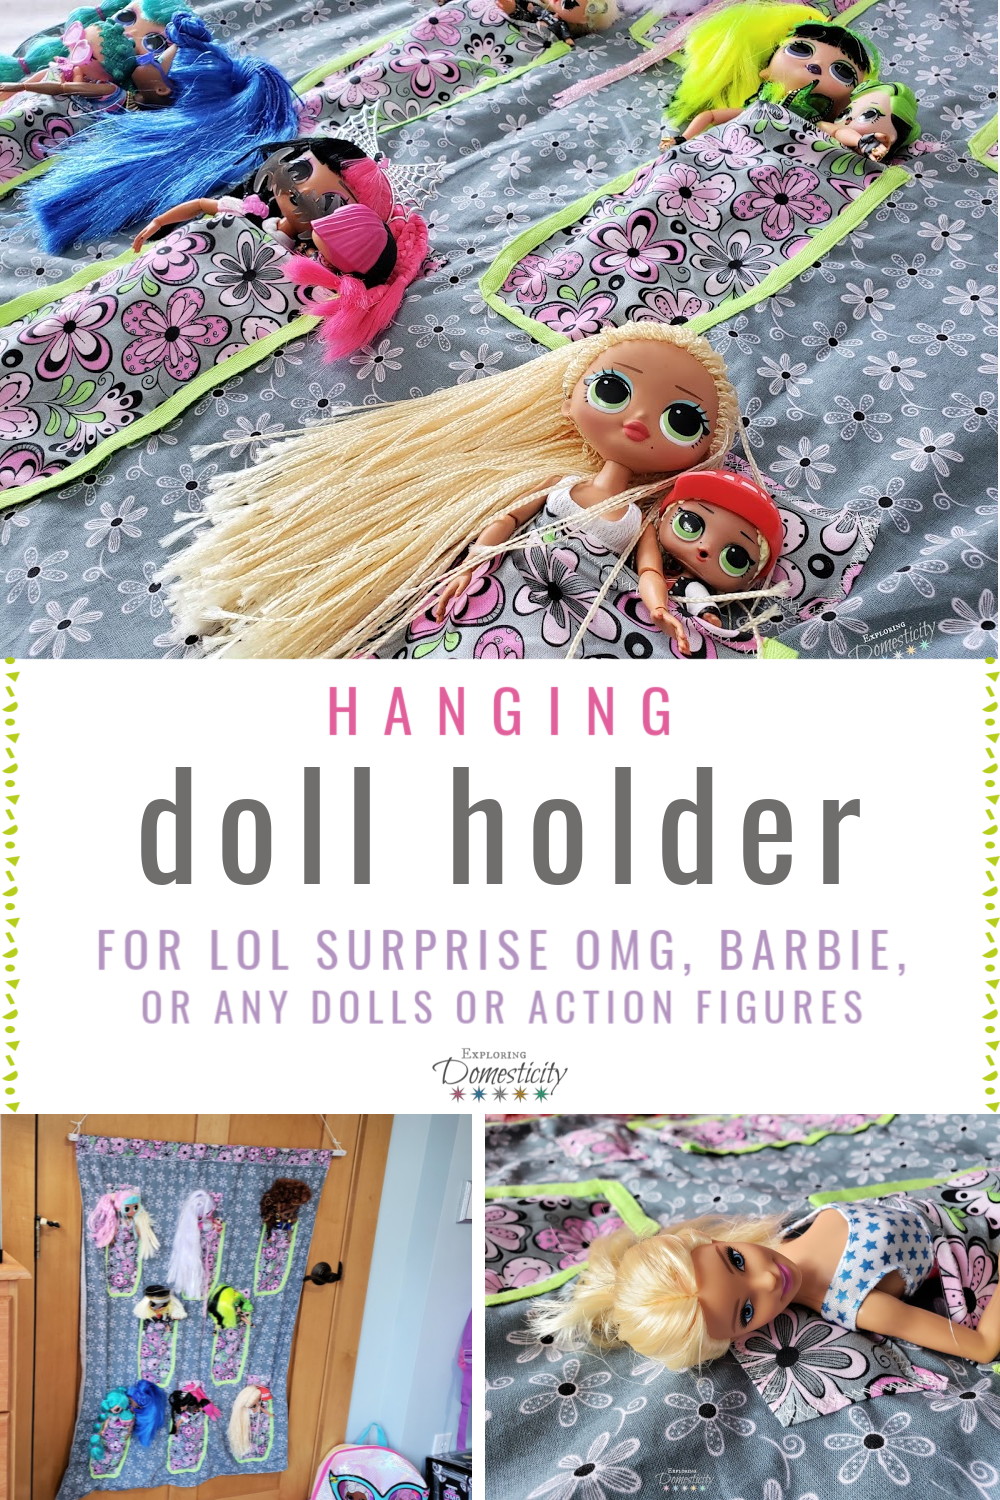 DIY LOL surprise doll house  Lol surprise organization ideas, Lol dolls,  Doll house